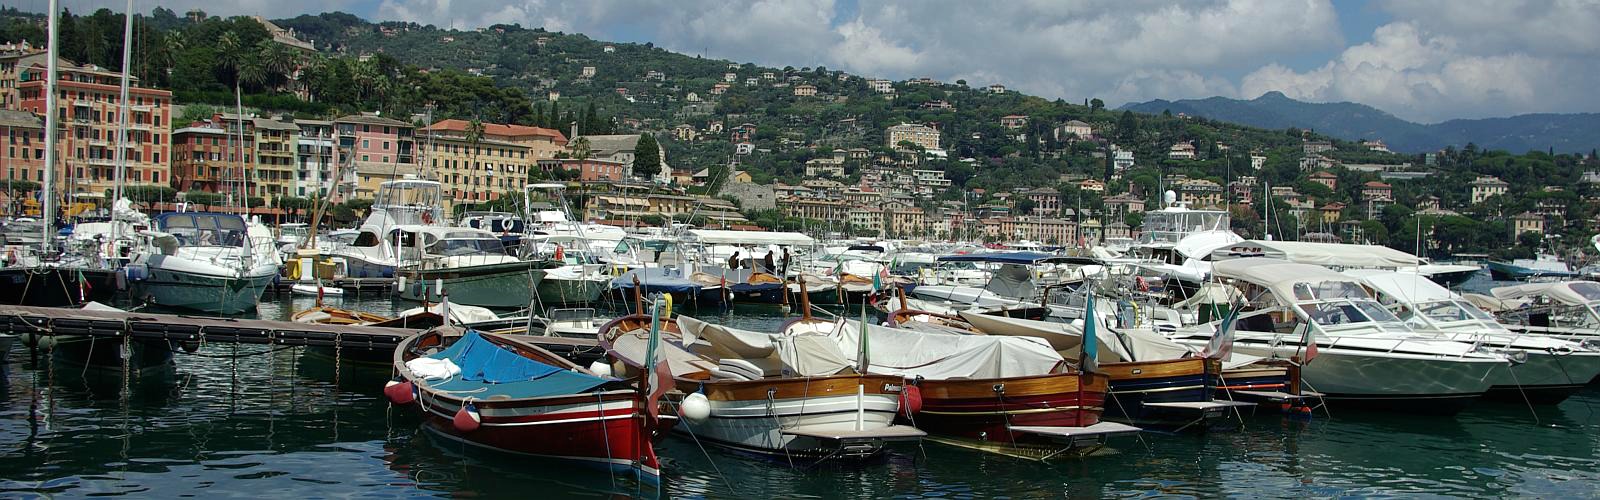 Liguria - Santa Margherita Ligure